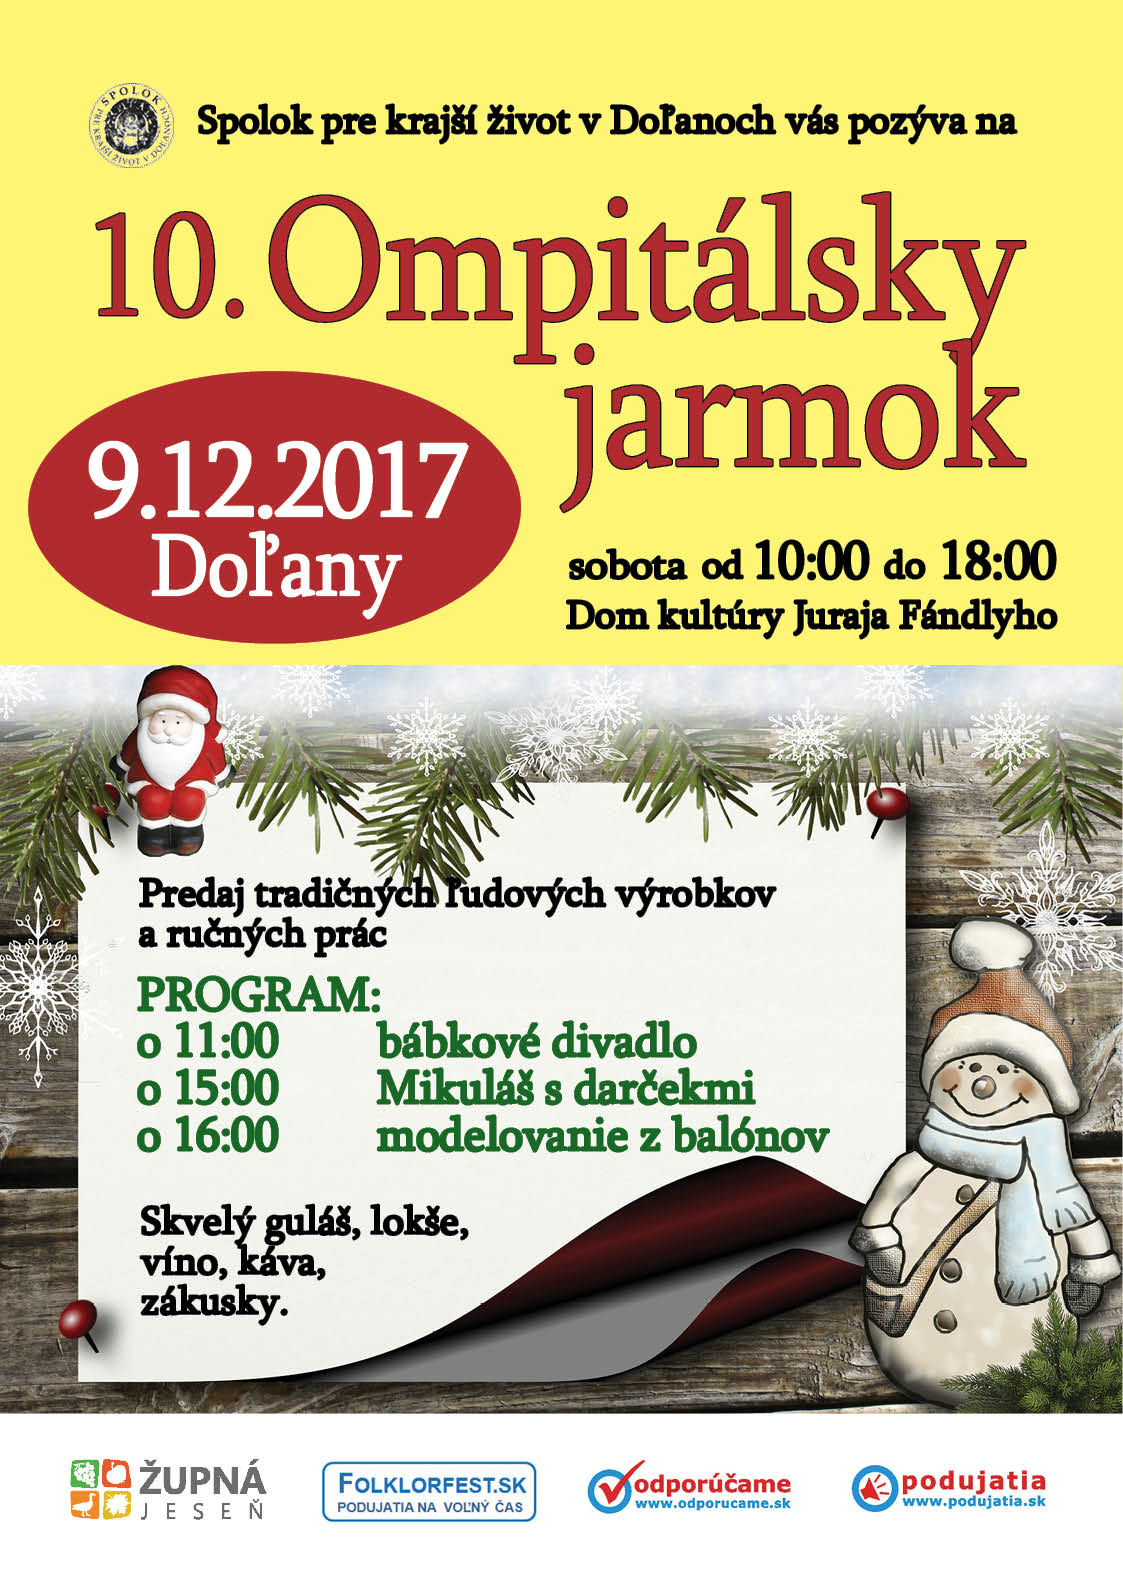 10. Ompitlsky jarmok Doany 2017